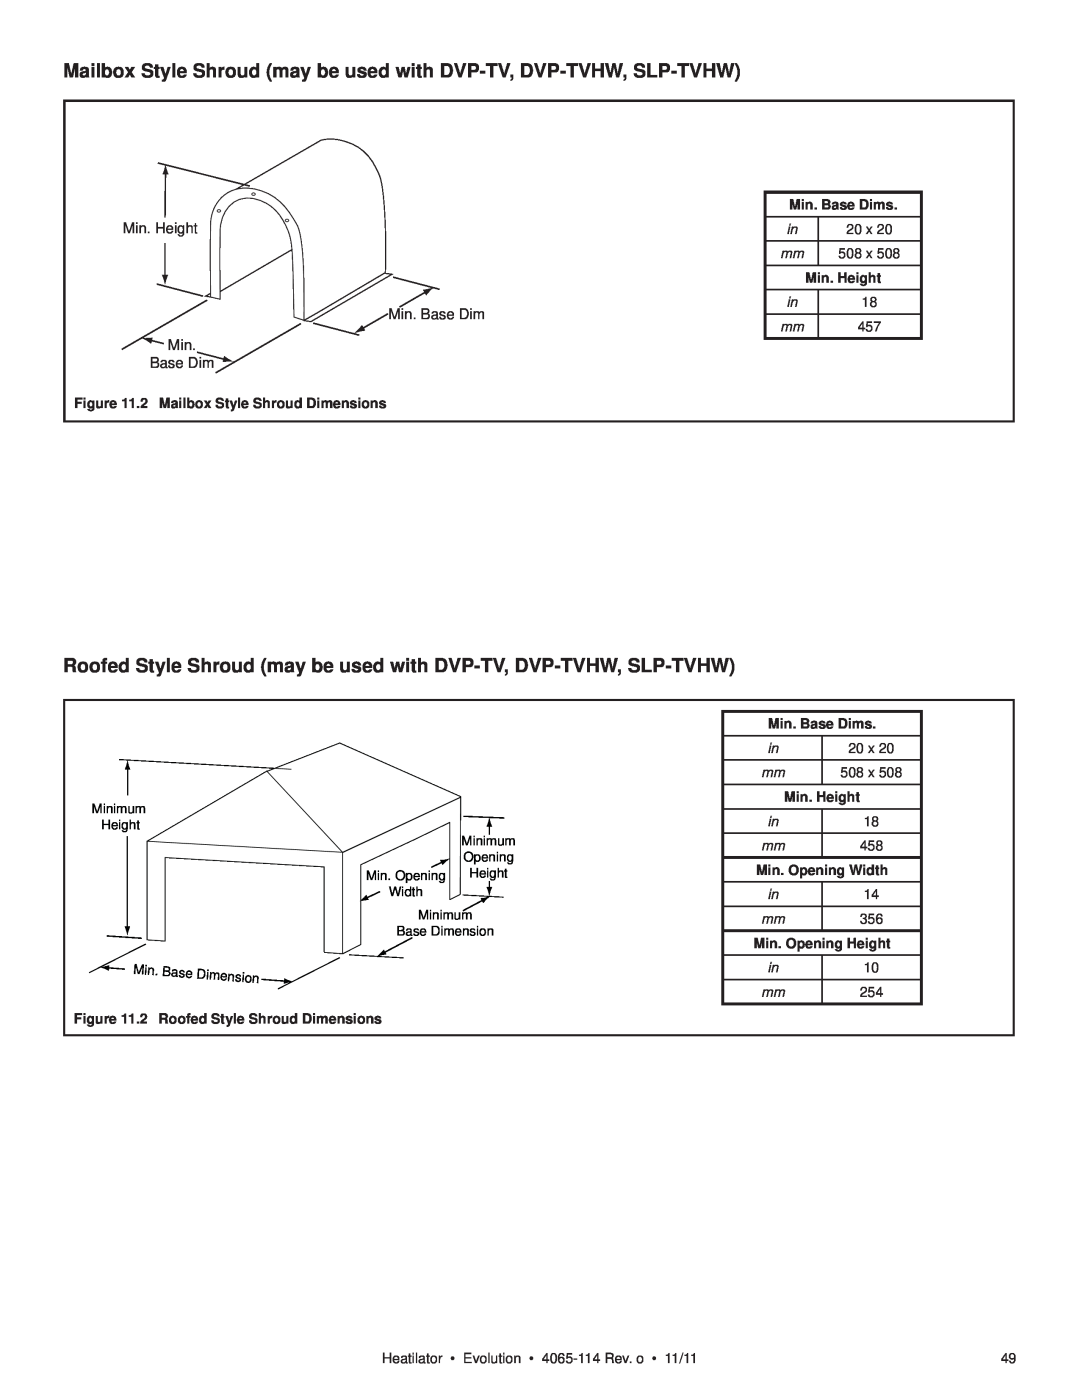 Heatiator NEVO4236I NEVO3630I Min. Height Min. Base Dim Min Base Dim, 2 Mailbox Style Shroud Dimensions, Min. Base Dims 